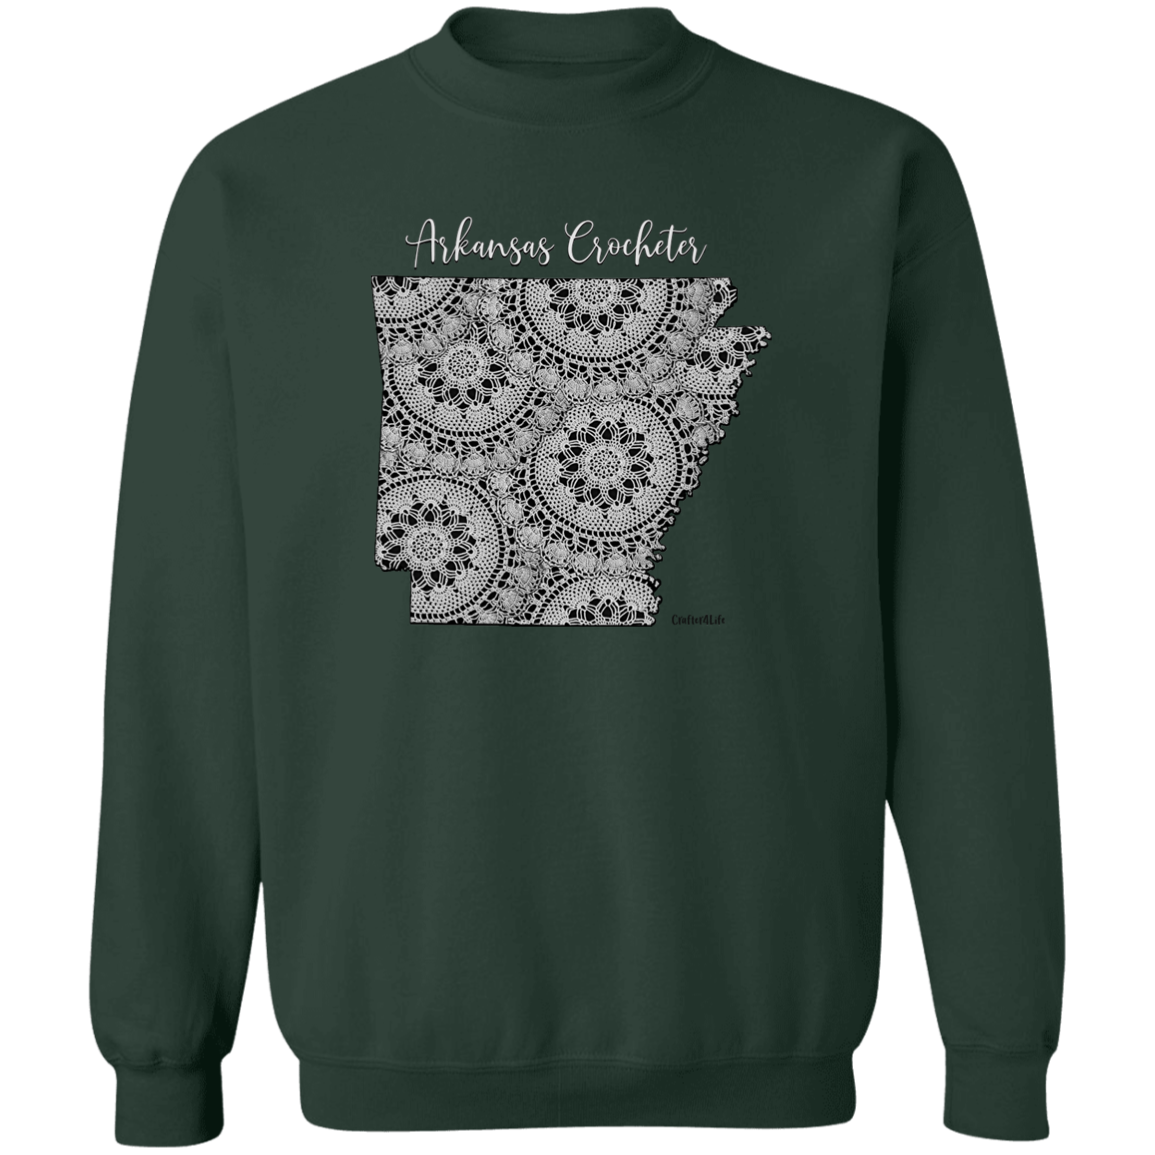 Arkansas Crocheter Crewneck Pullover Sweatshirt